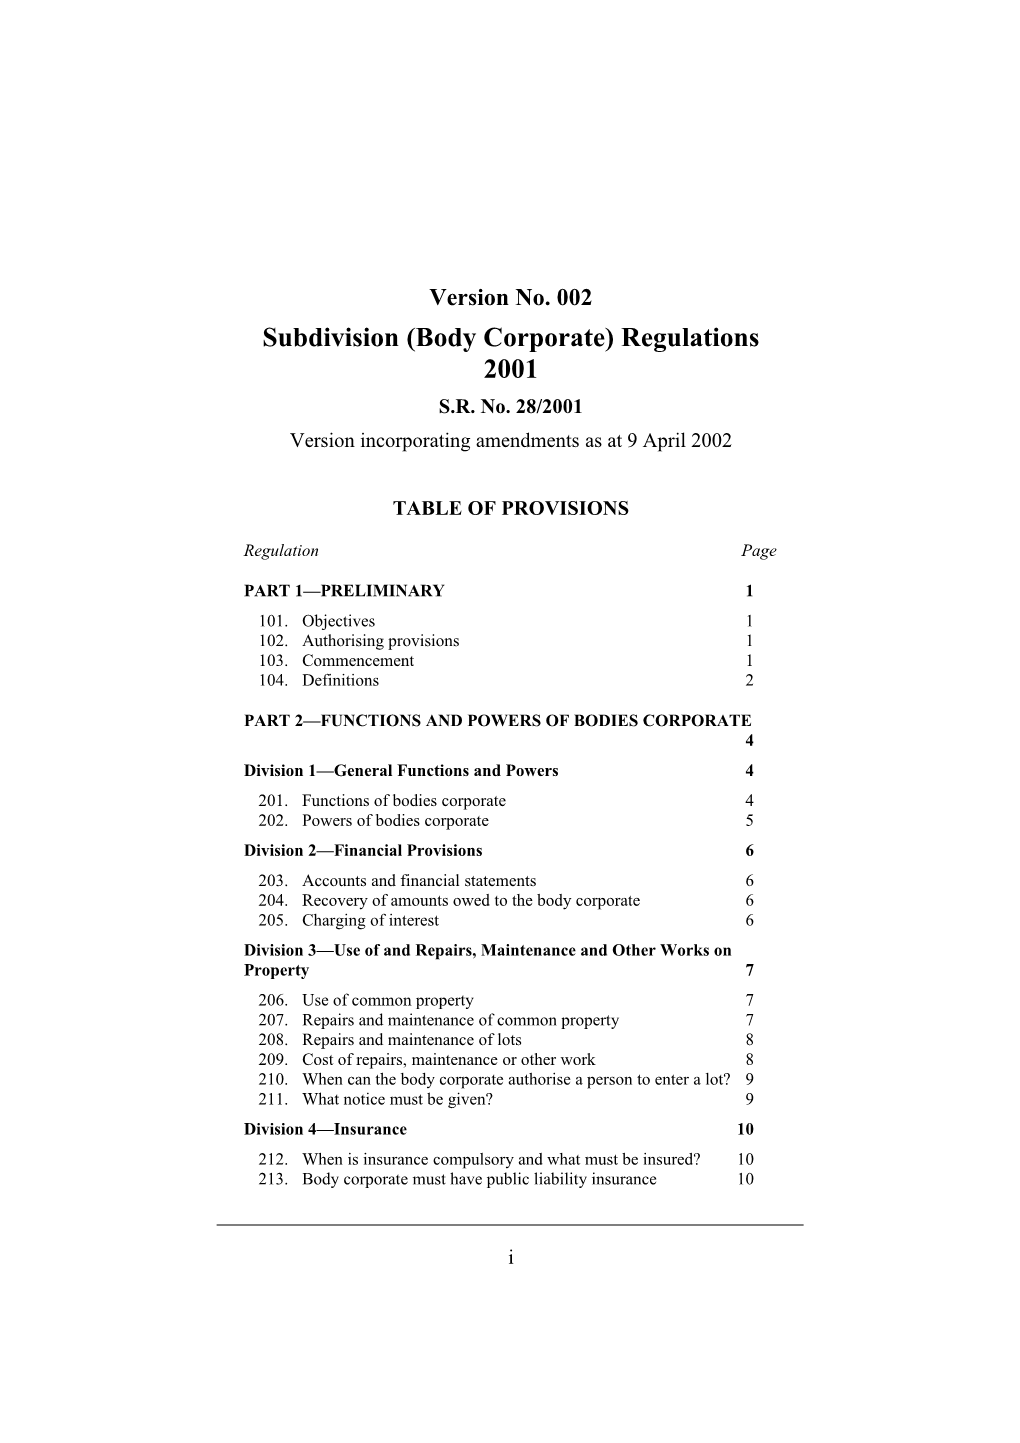 Subdivision (Body Corporate) Regulations 2001